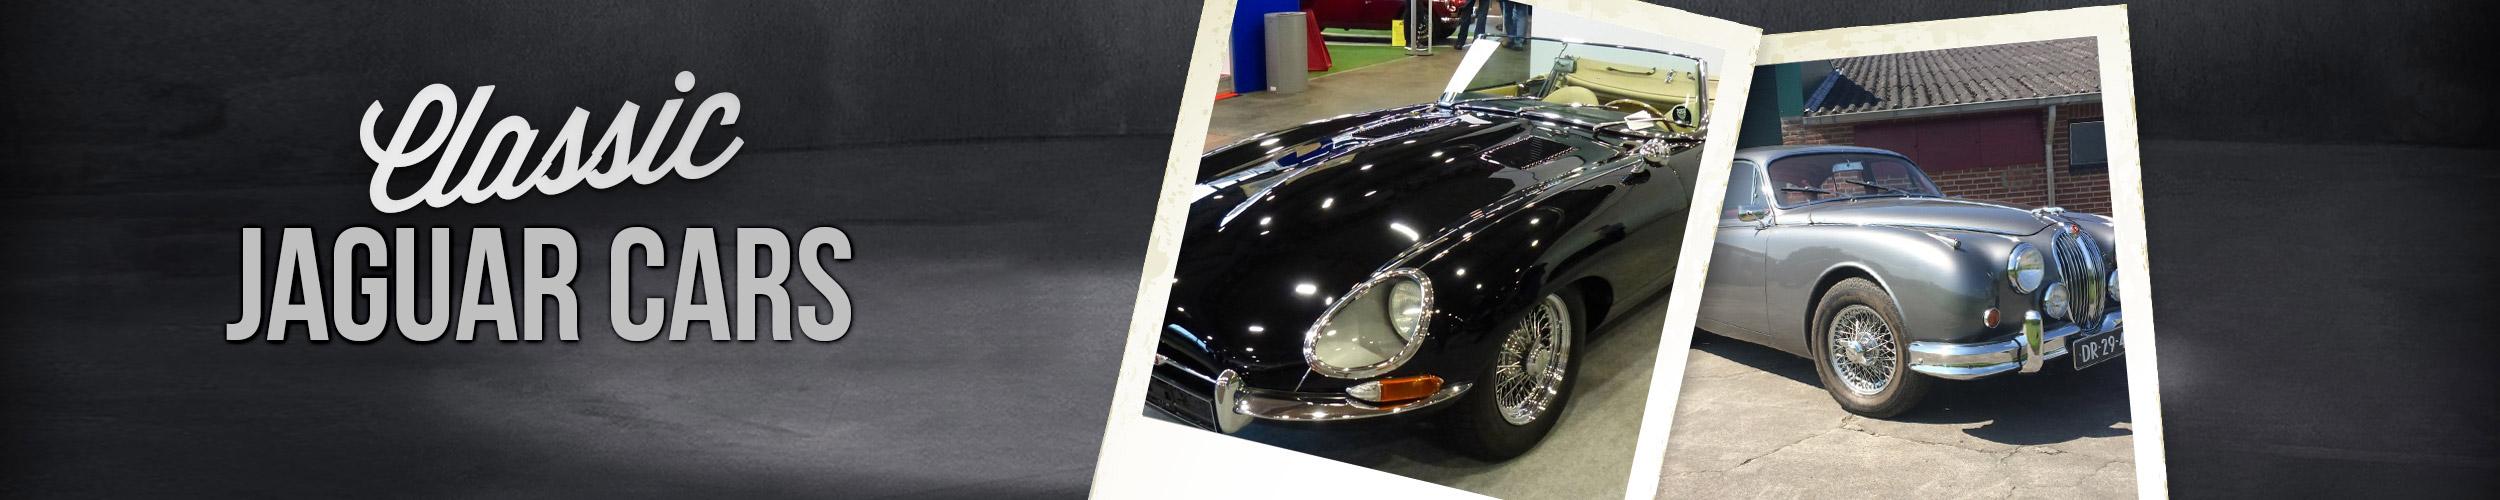 Classic Jaguar Cars At Show Cars Of Boca Raton, FL